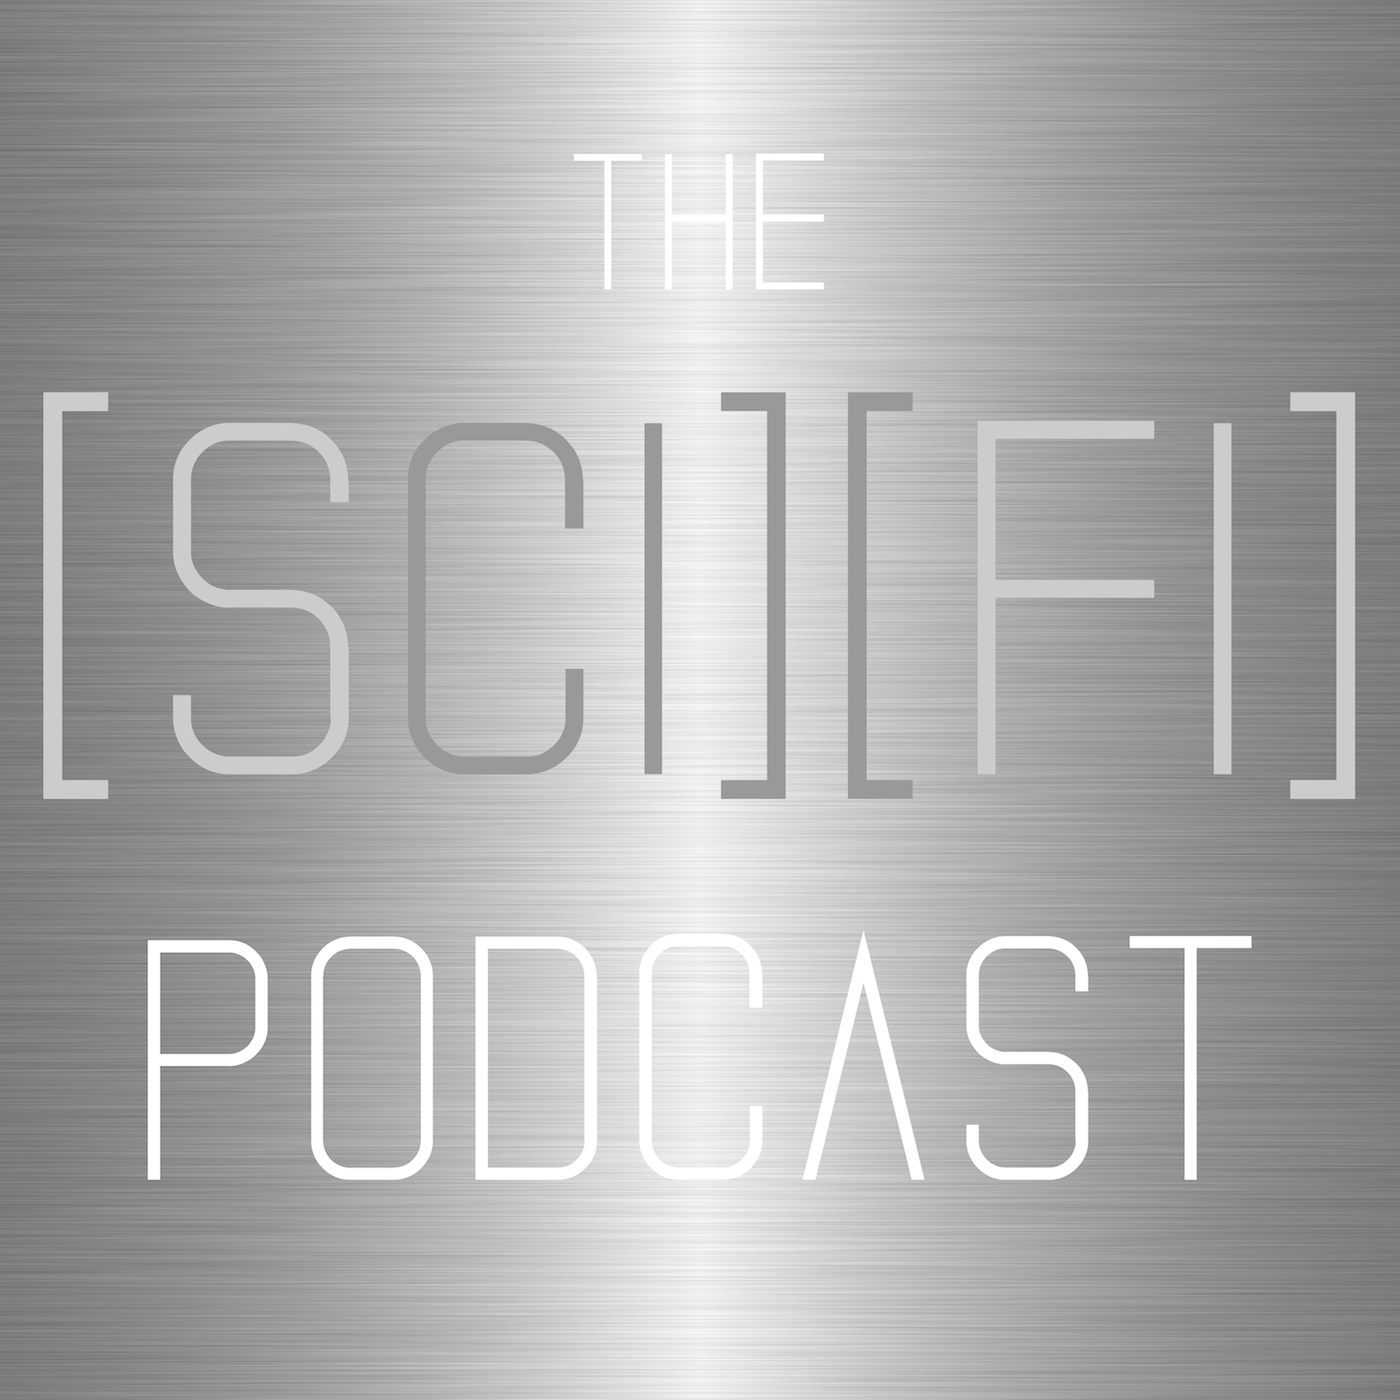 The SciFi Podcast